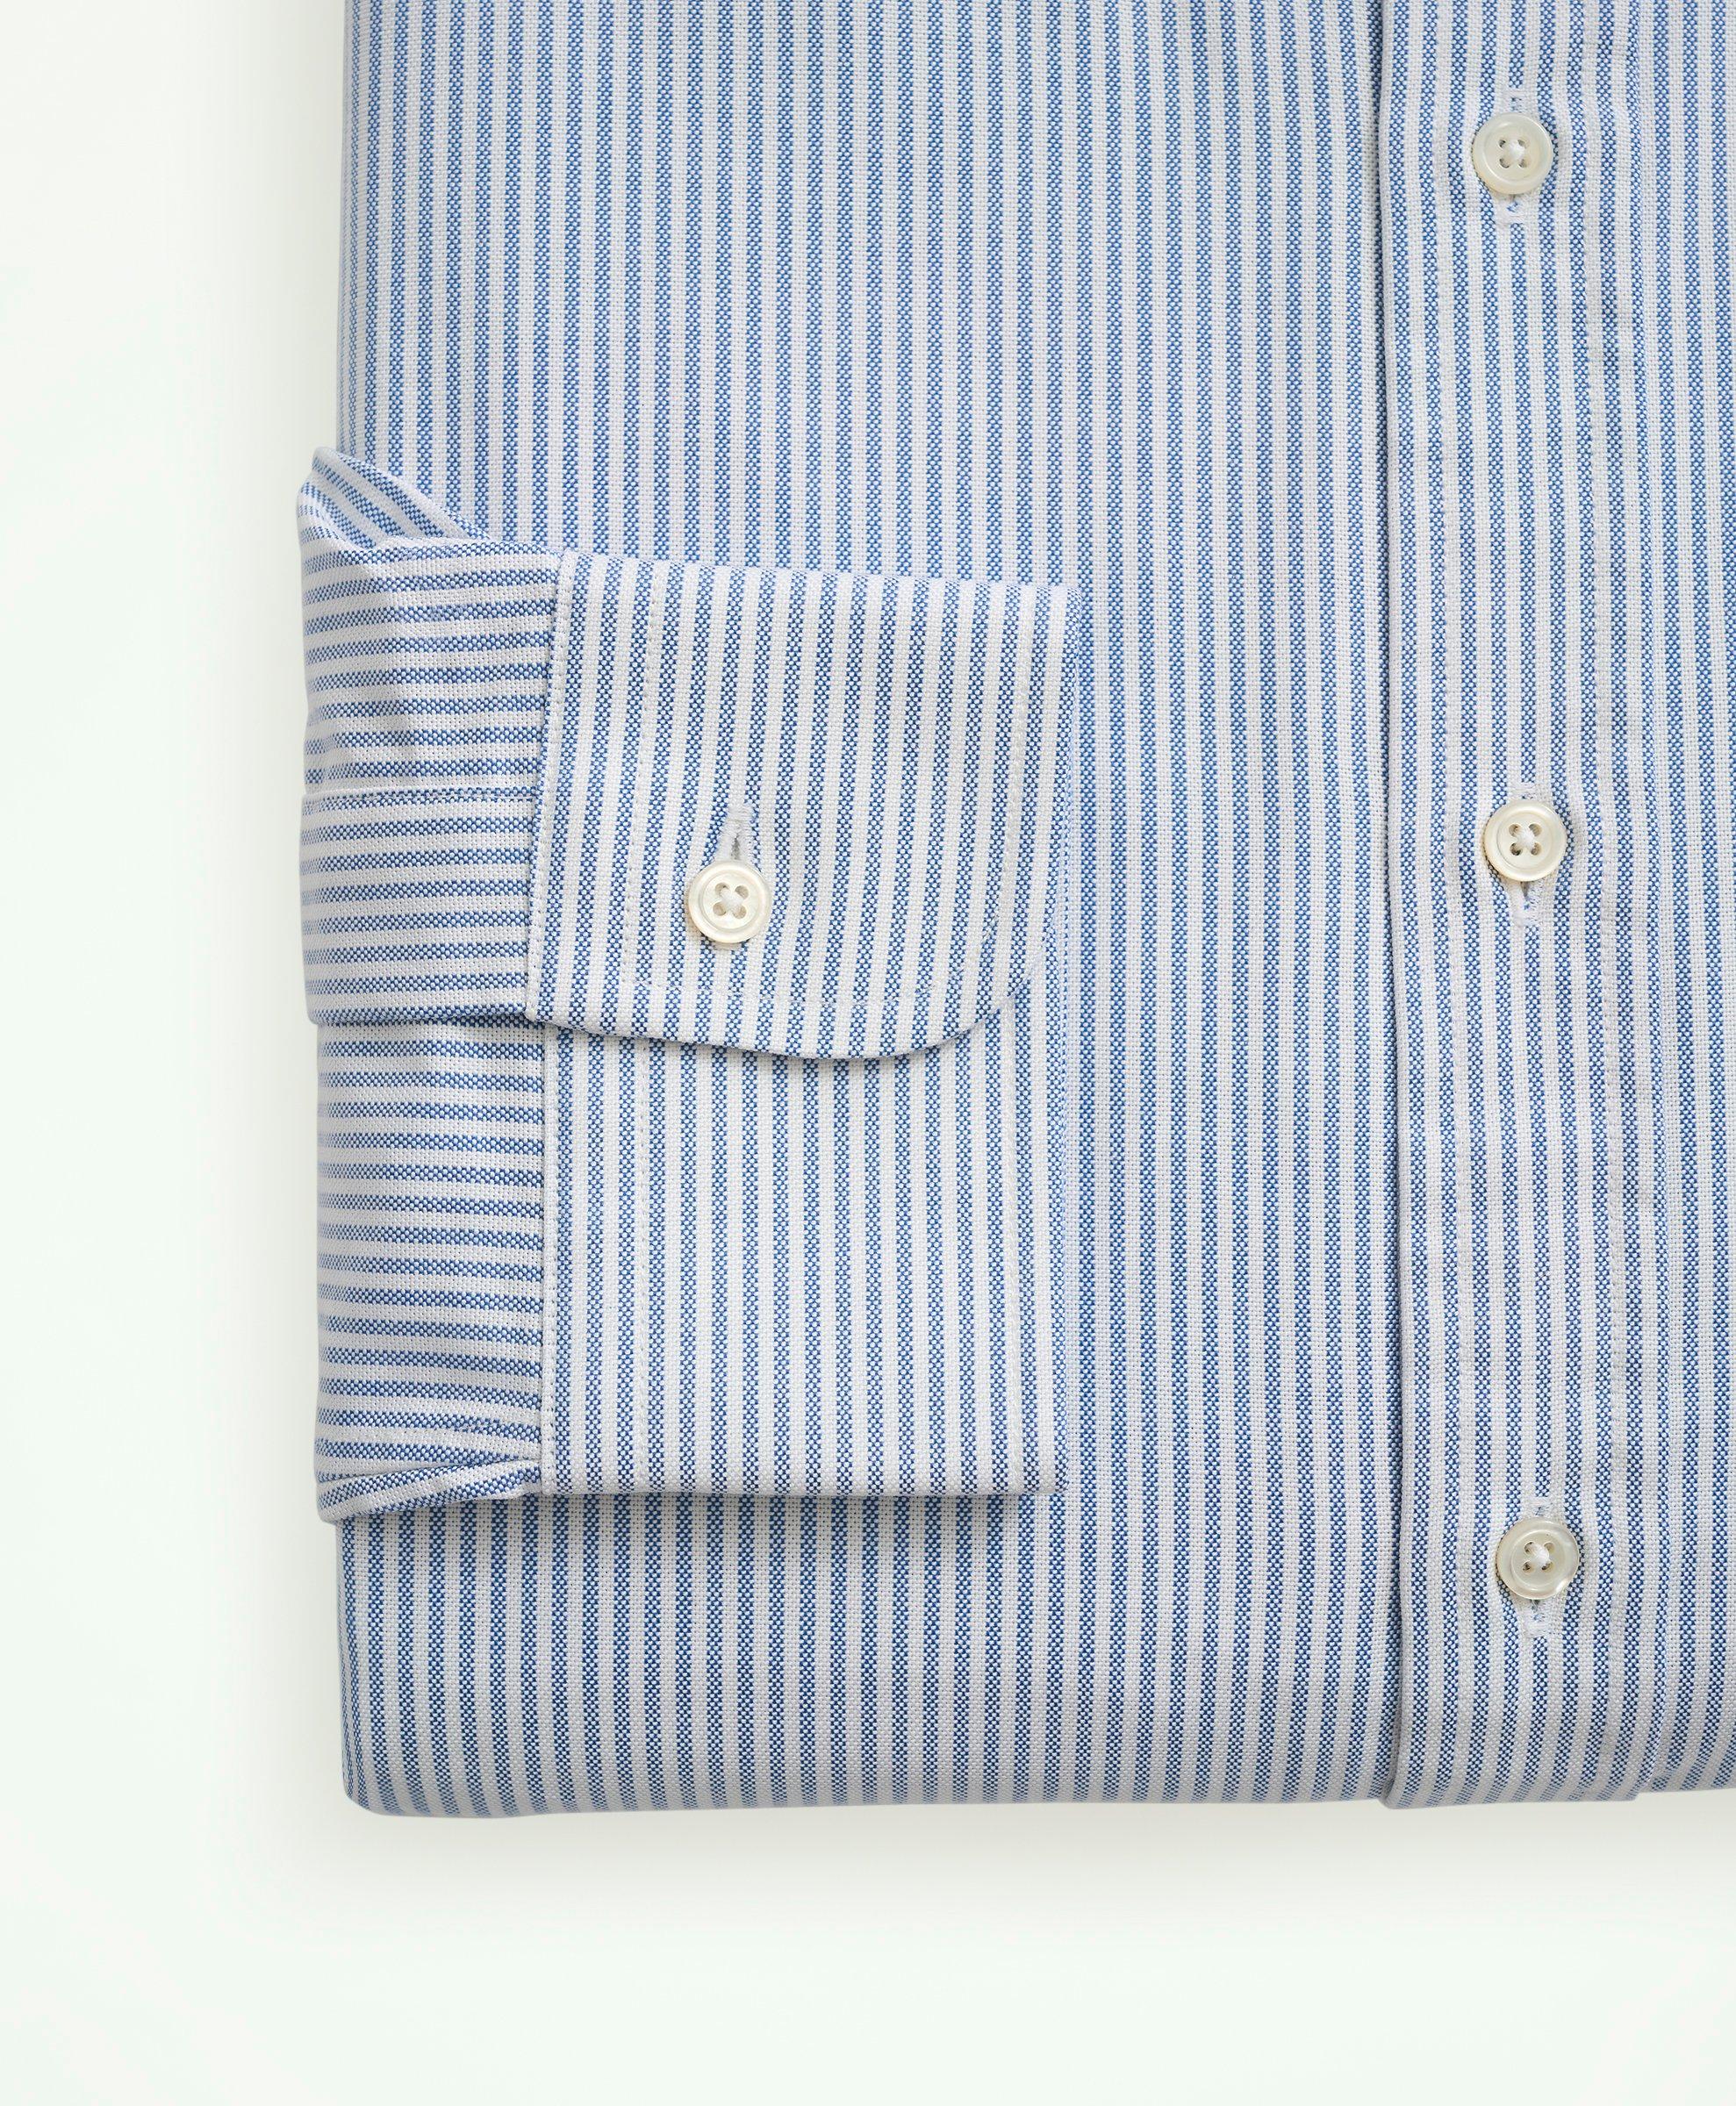 American-Made Oxford Cloth Button-Down Stripe Dress Shirt